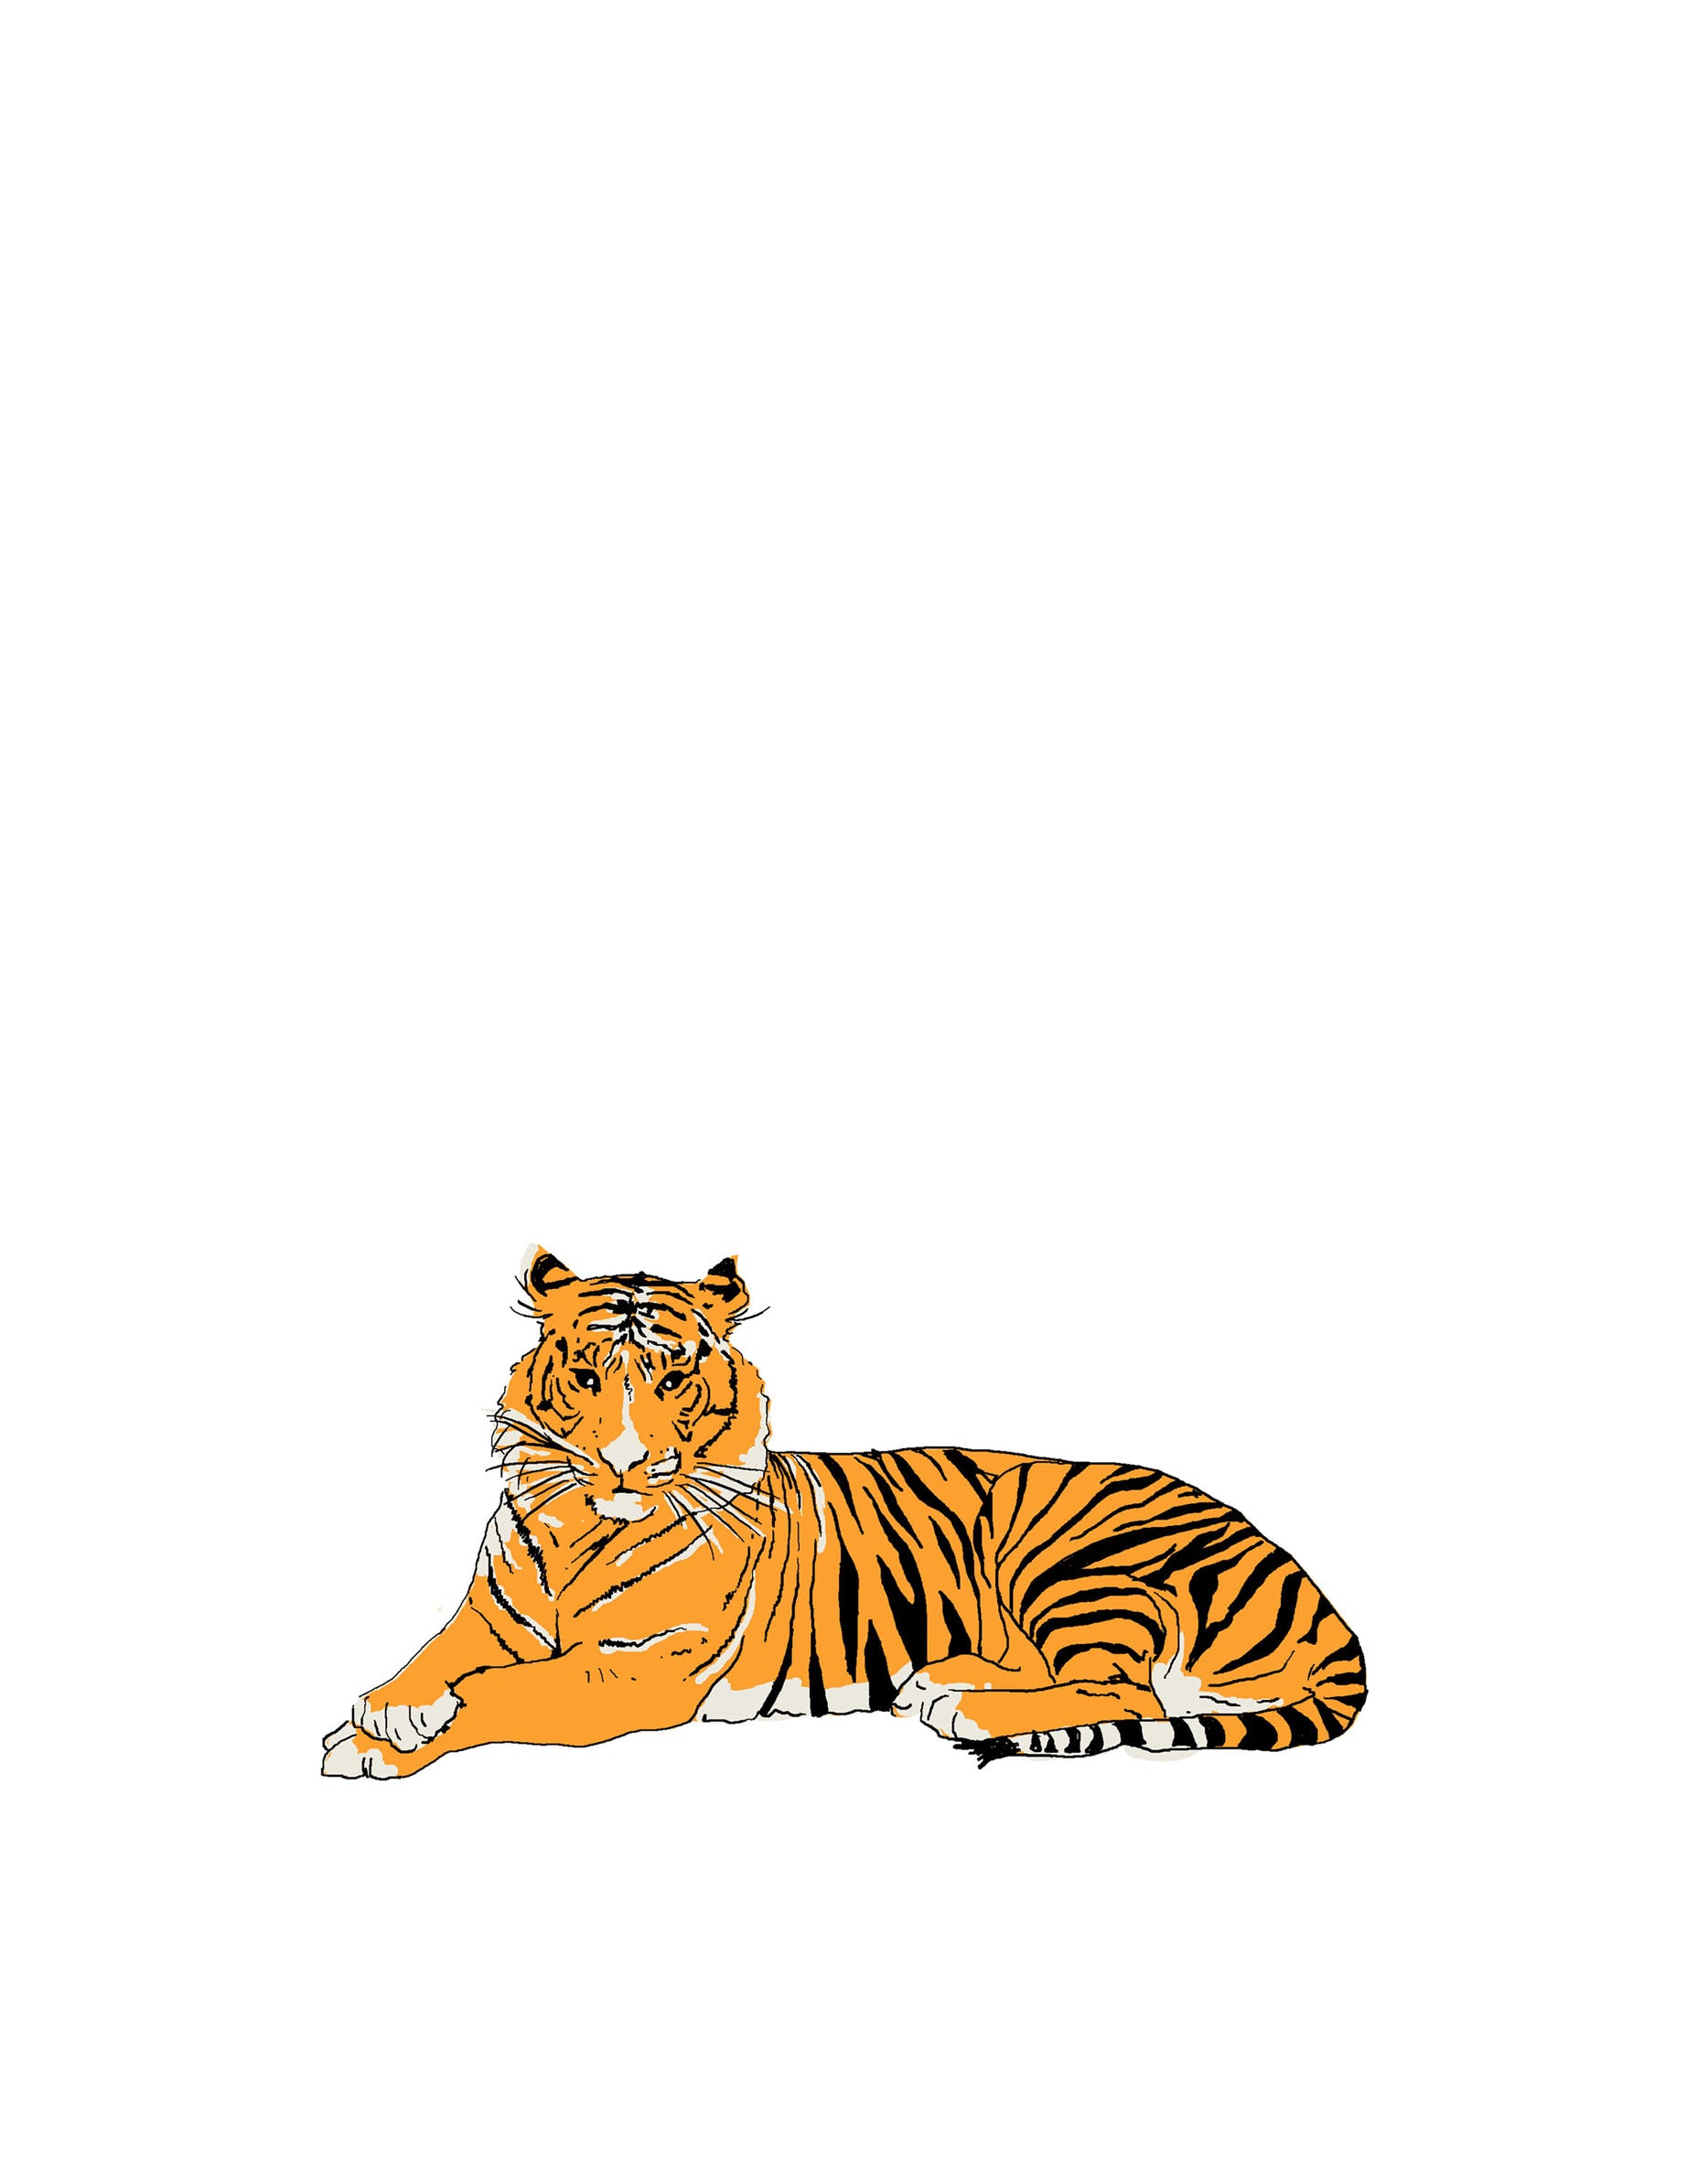 Lying Down Tiger Wall Sticker - Palava